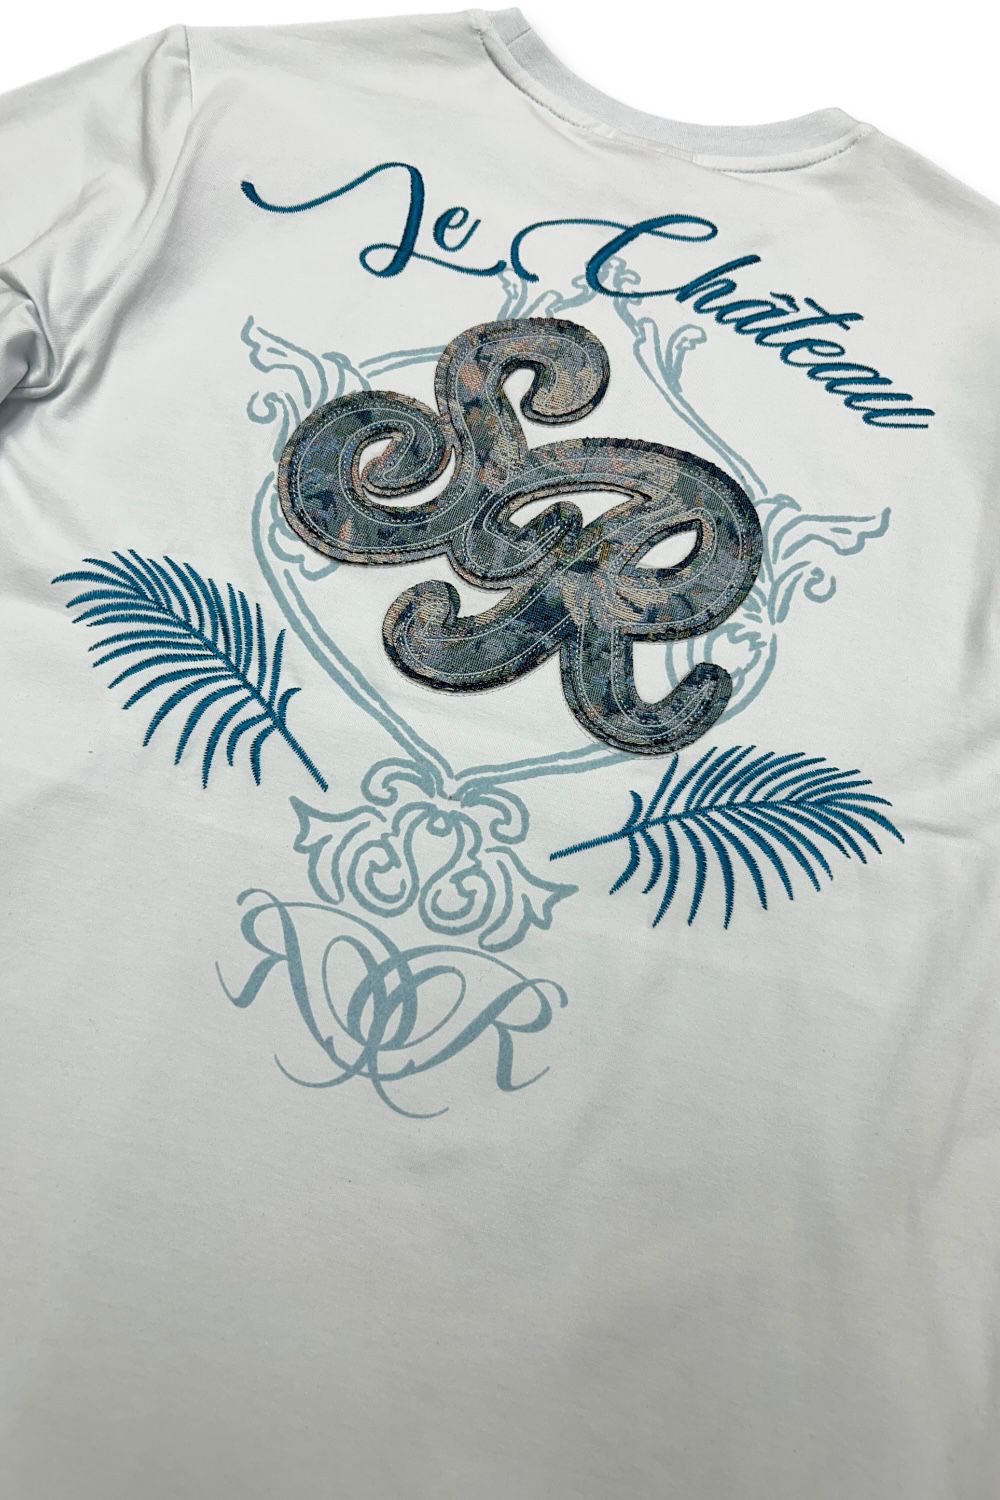 Smoke Rise - Tapestry T-shirt - Illusion